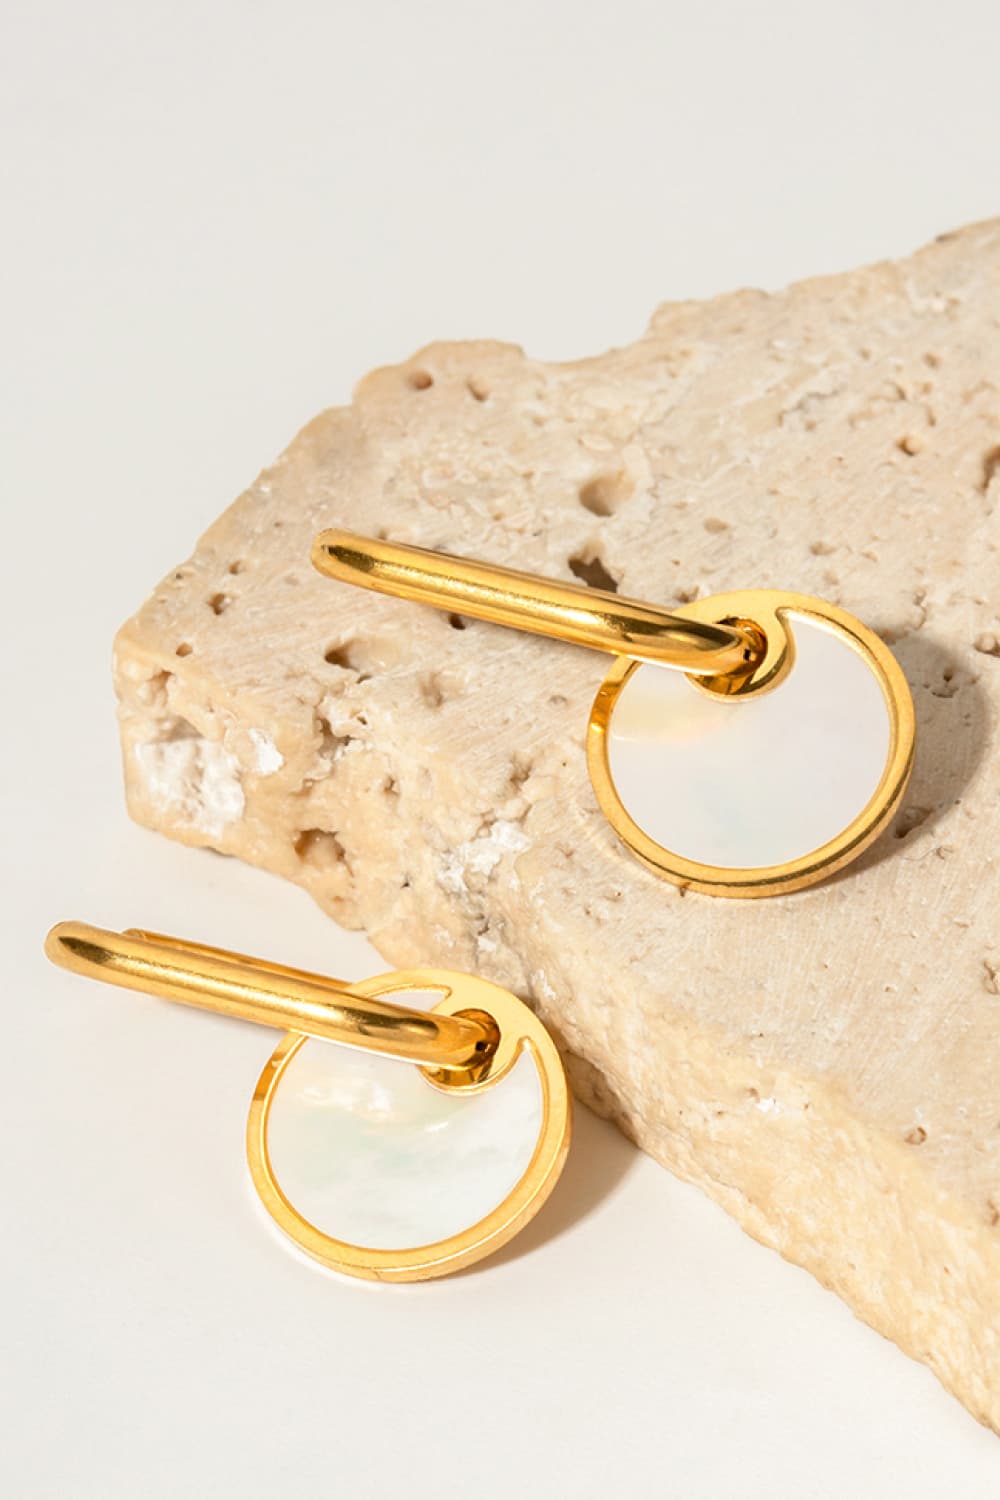 Copper White Mother-Of-Pearl Drop Earrings - Earrings - FITGGINS